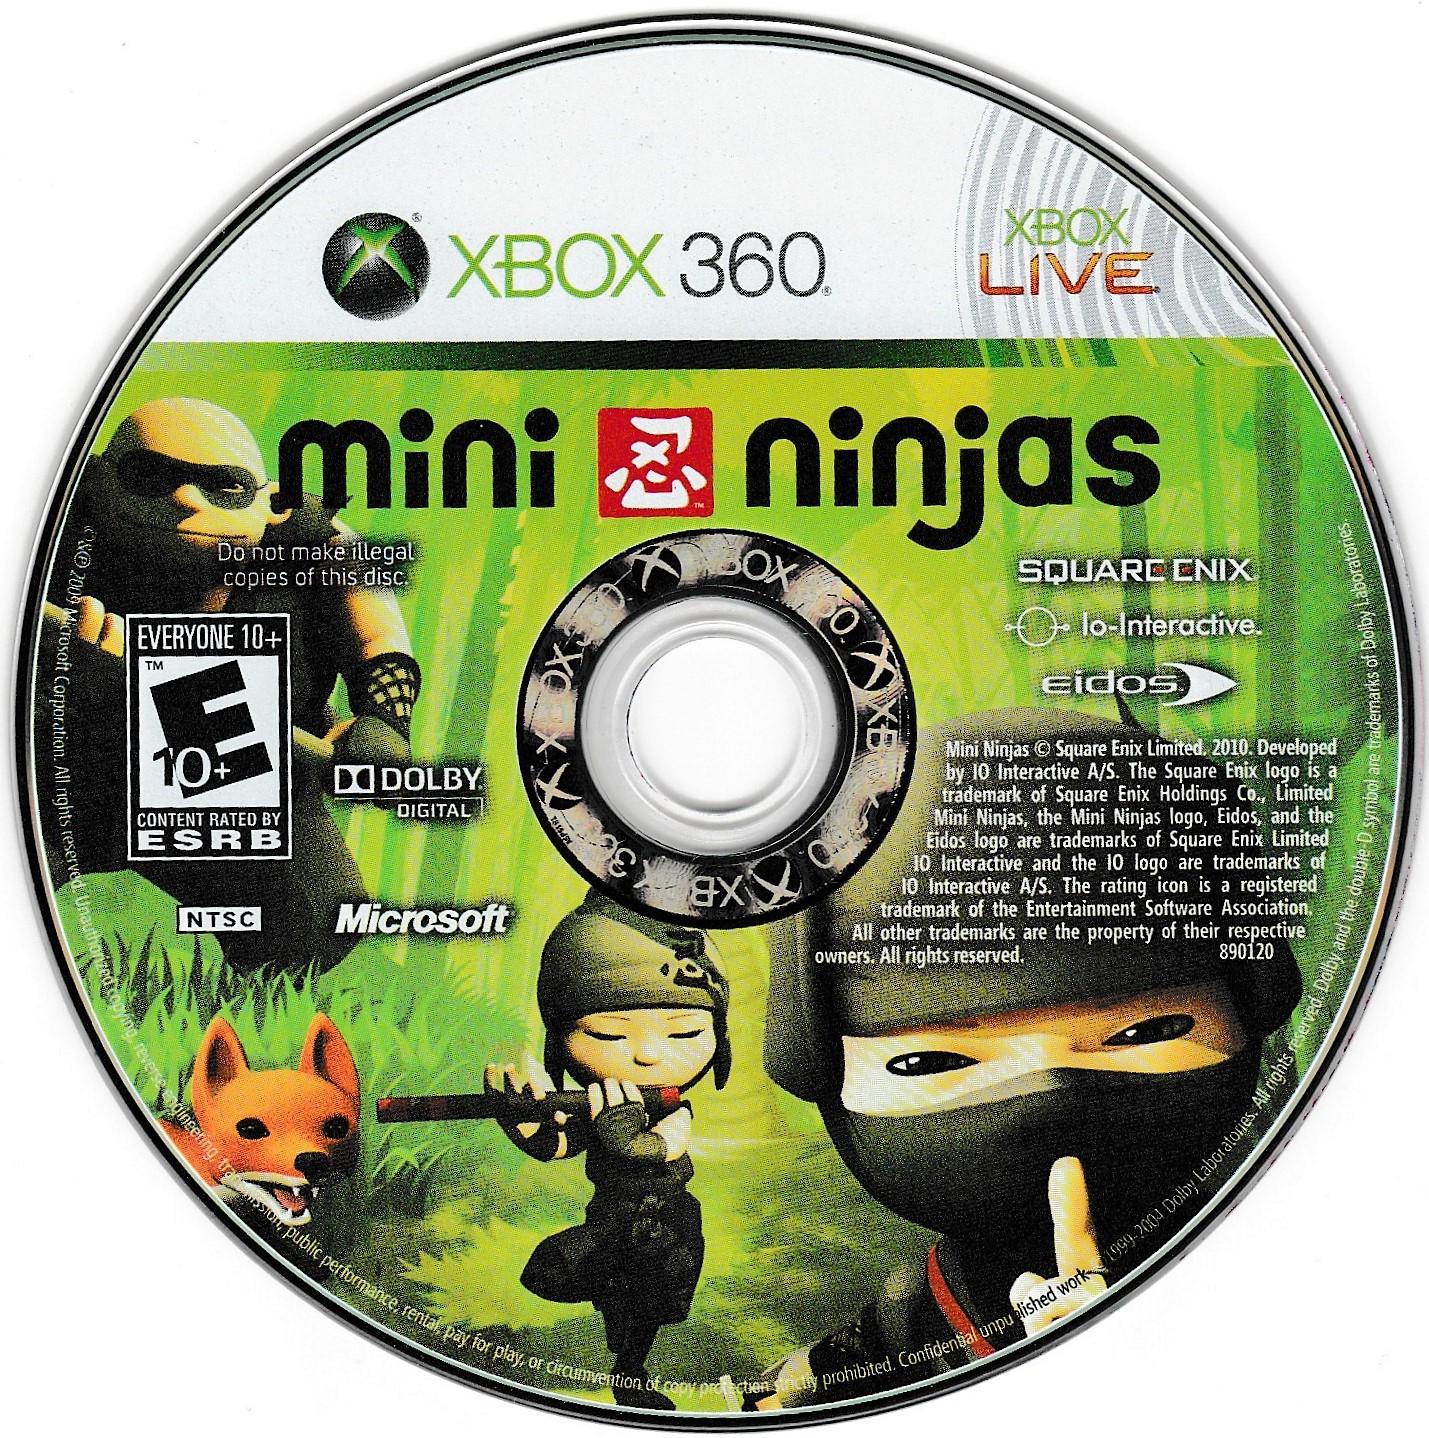 mini vmac disk images games